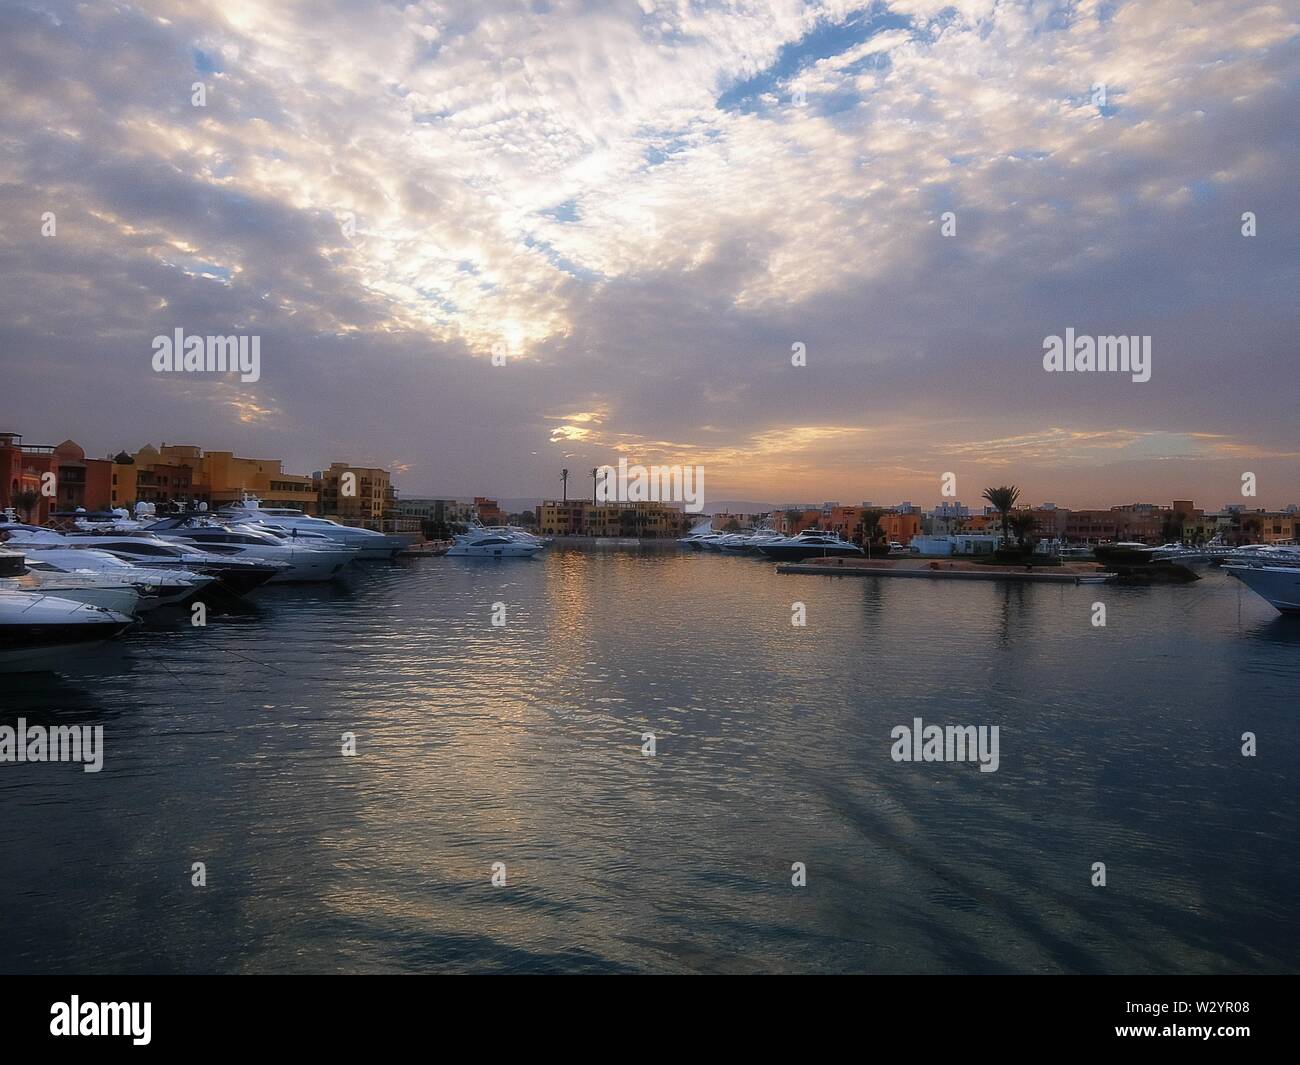 Abu Tig Marina in El Gouna, Egypt Stock Photo